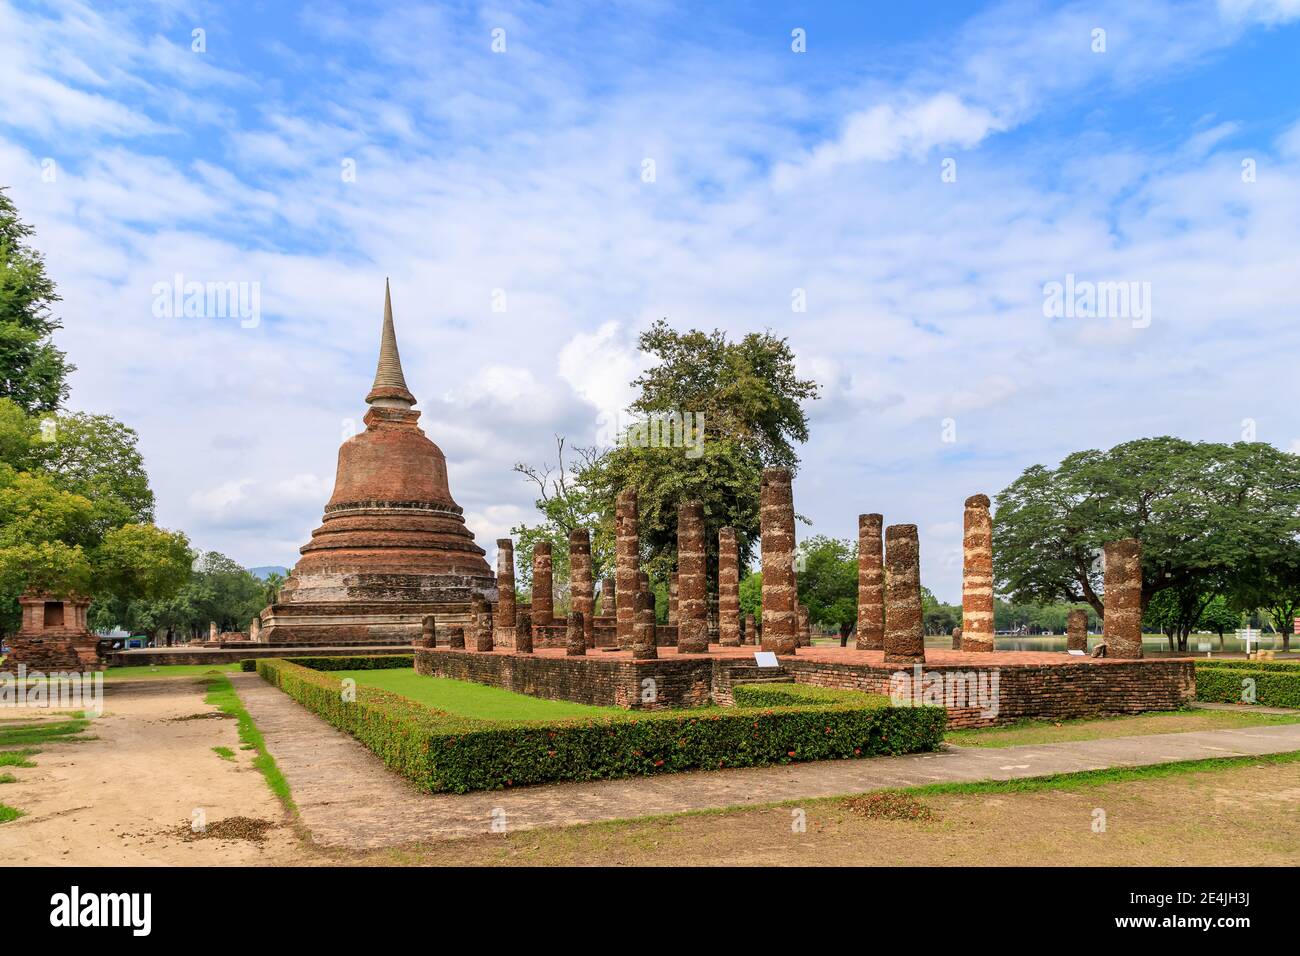 Pagoda and ruined chapel monastery complex at Wat Chana Songkhram temple, Sukhothai Historical Park, Thailand Stock Photo